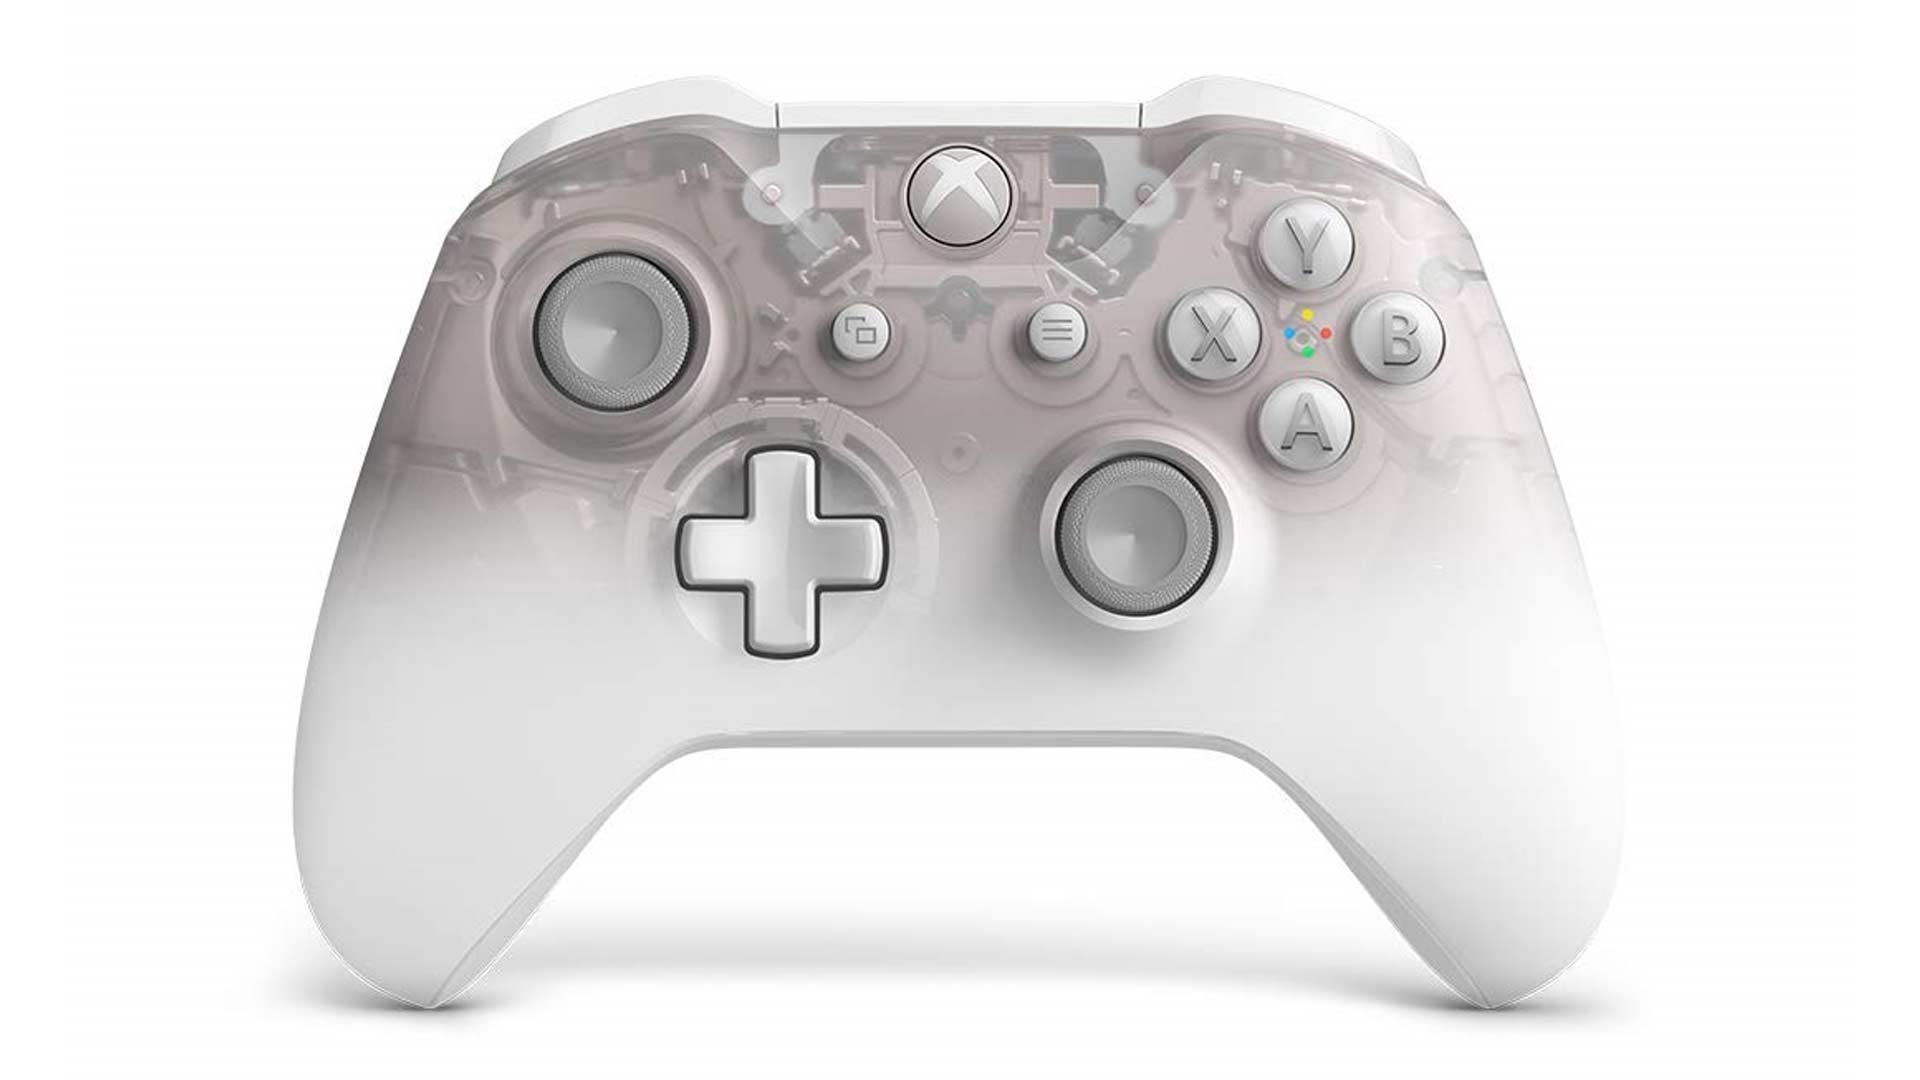 Xbox One Phantom White Controller